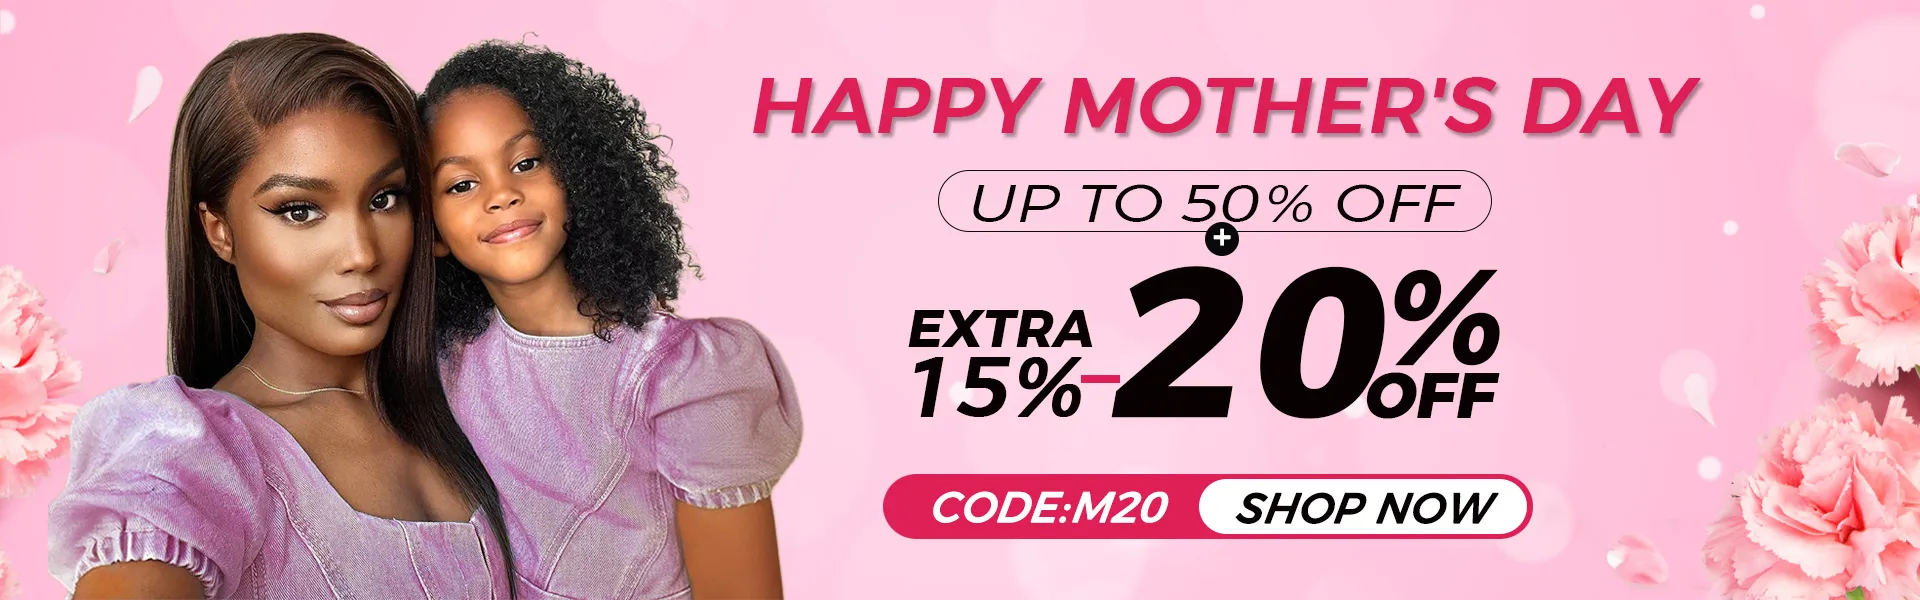 motherd day sale